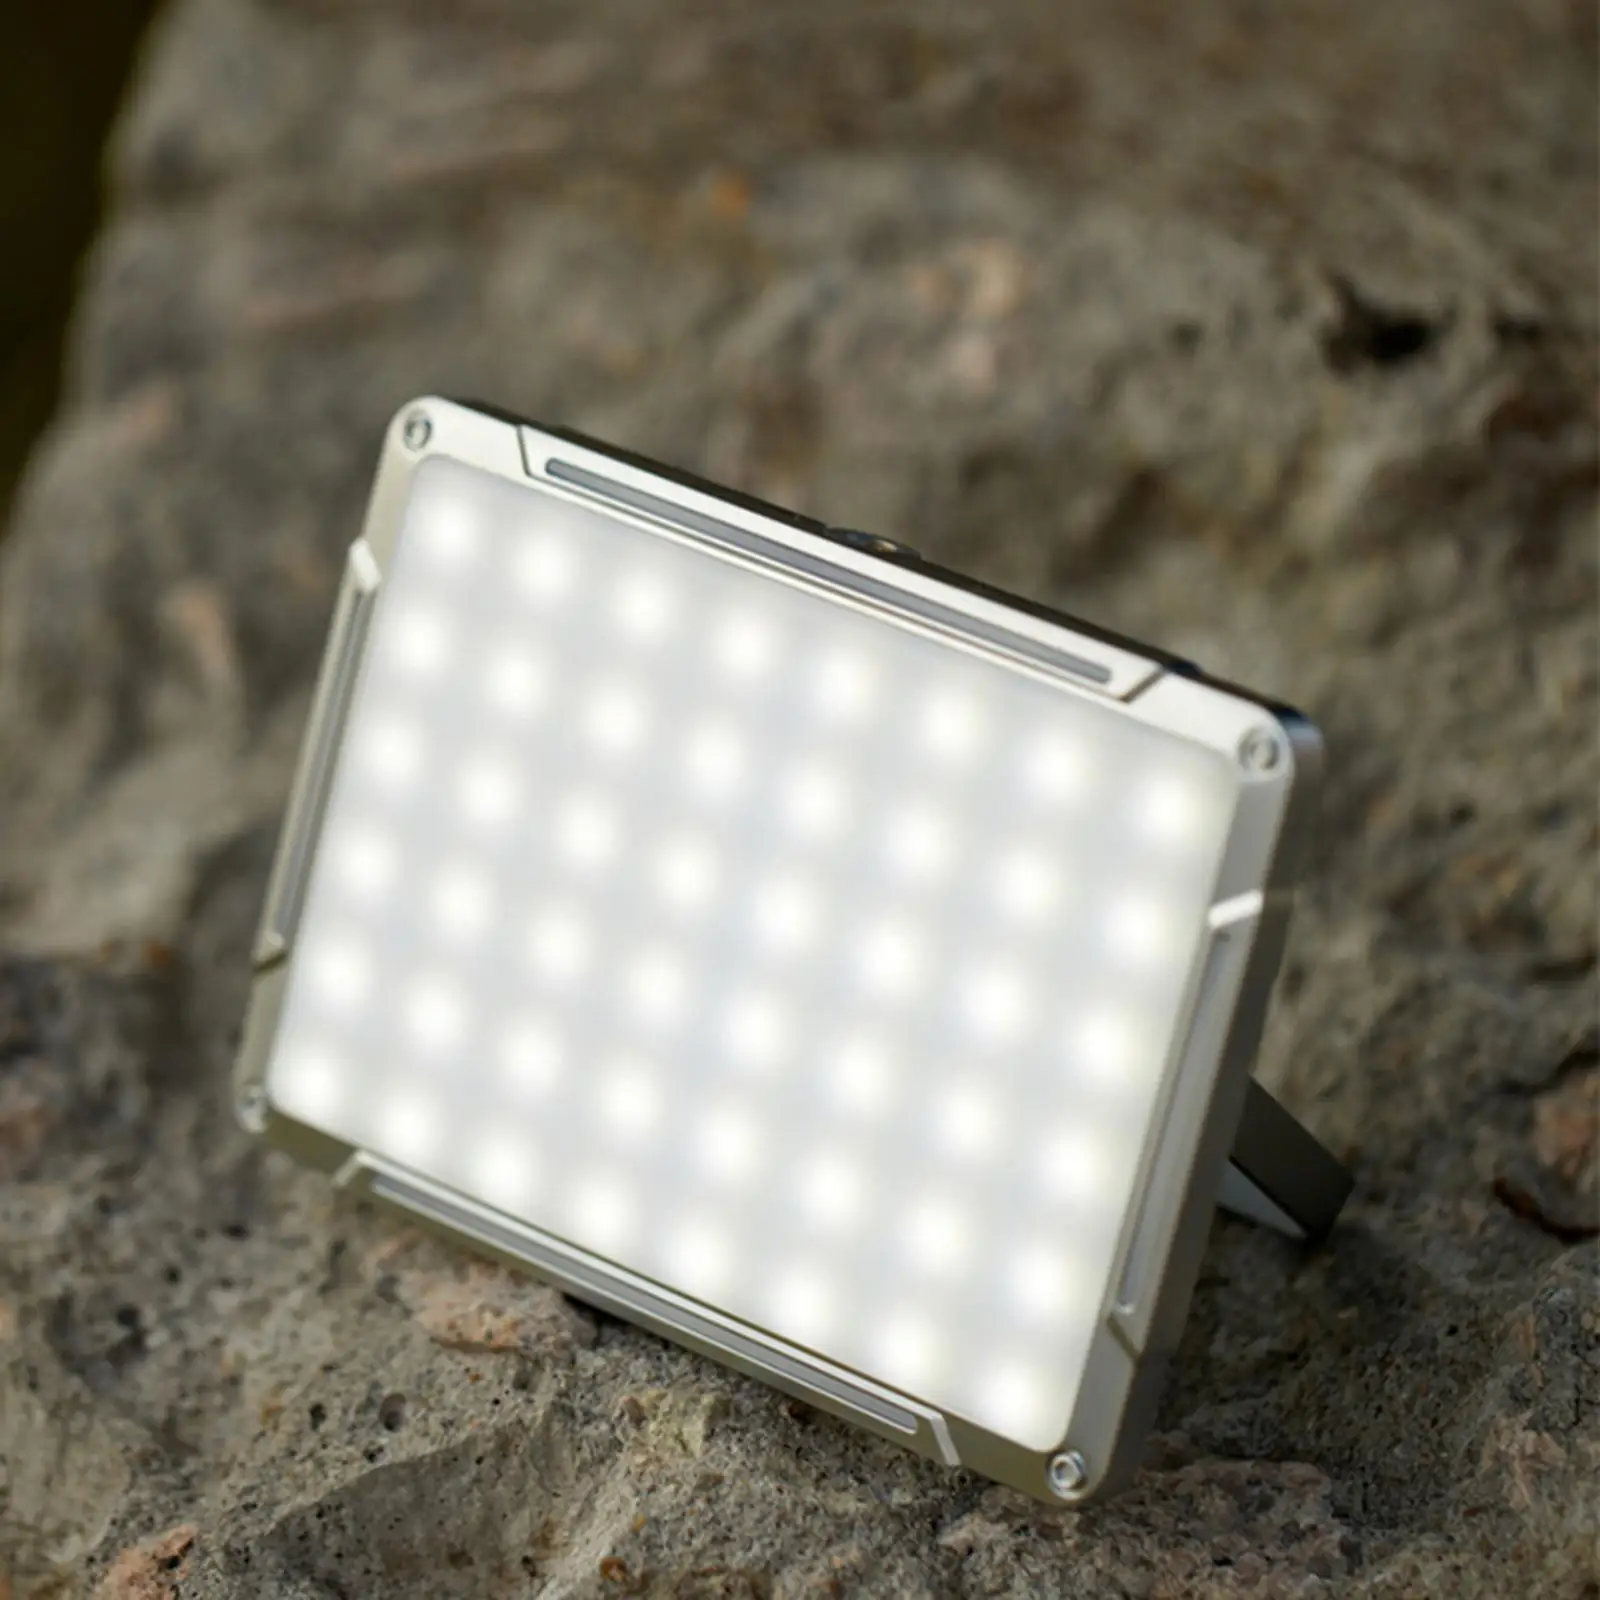 Modern Hanging Garden Lamp Outdoor USB Rechargeable Lighting Fixture light for Garden BBQ Fishing Hiking Home